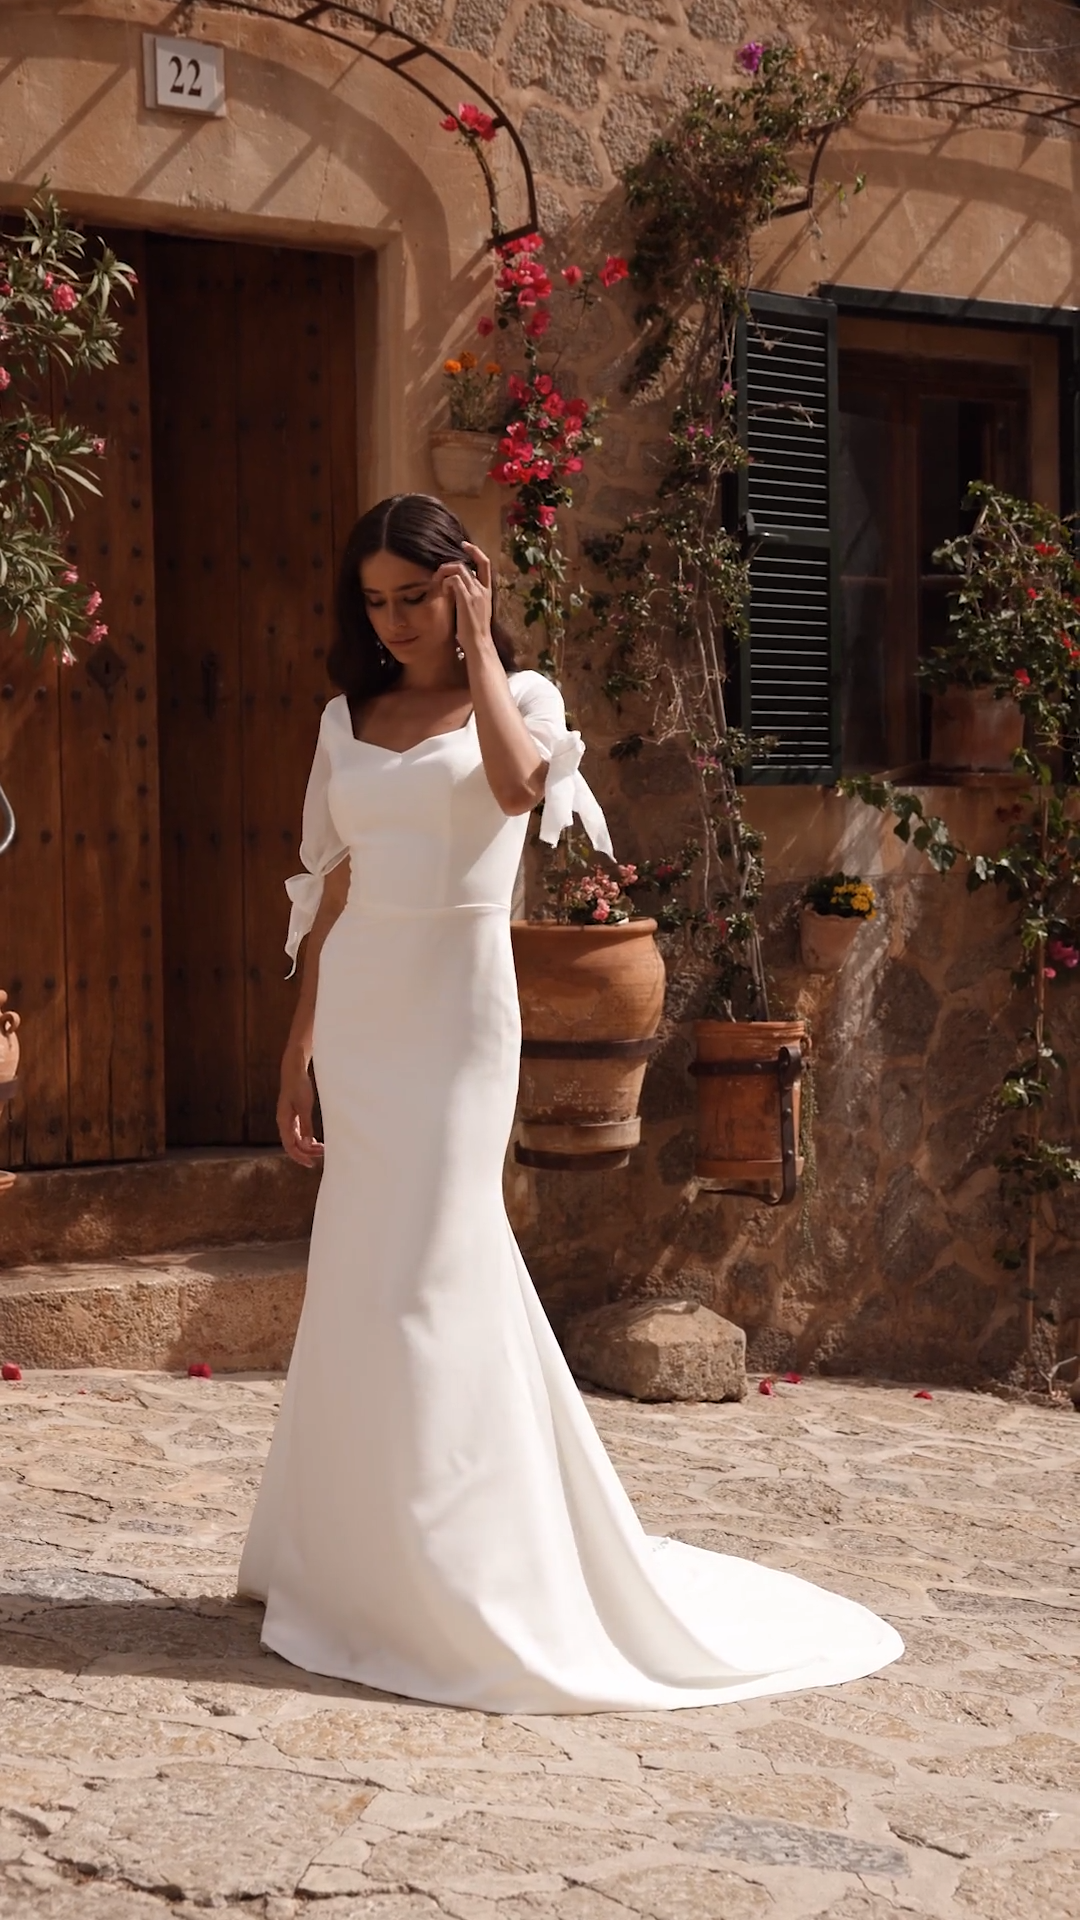 Modest Wedding Dresses - Lace, Boho & More